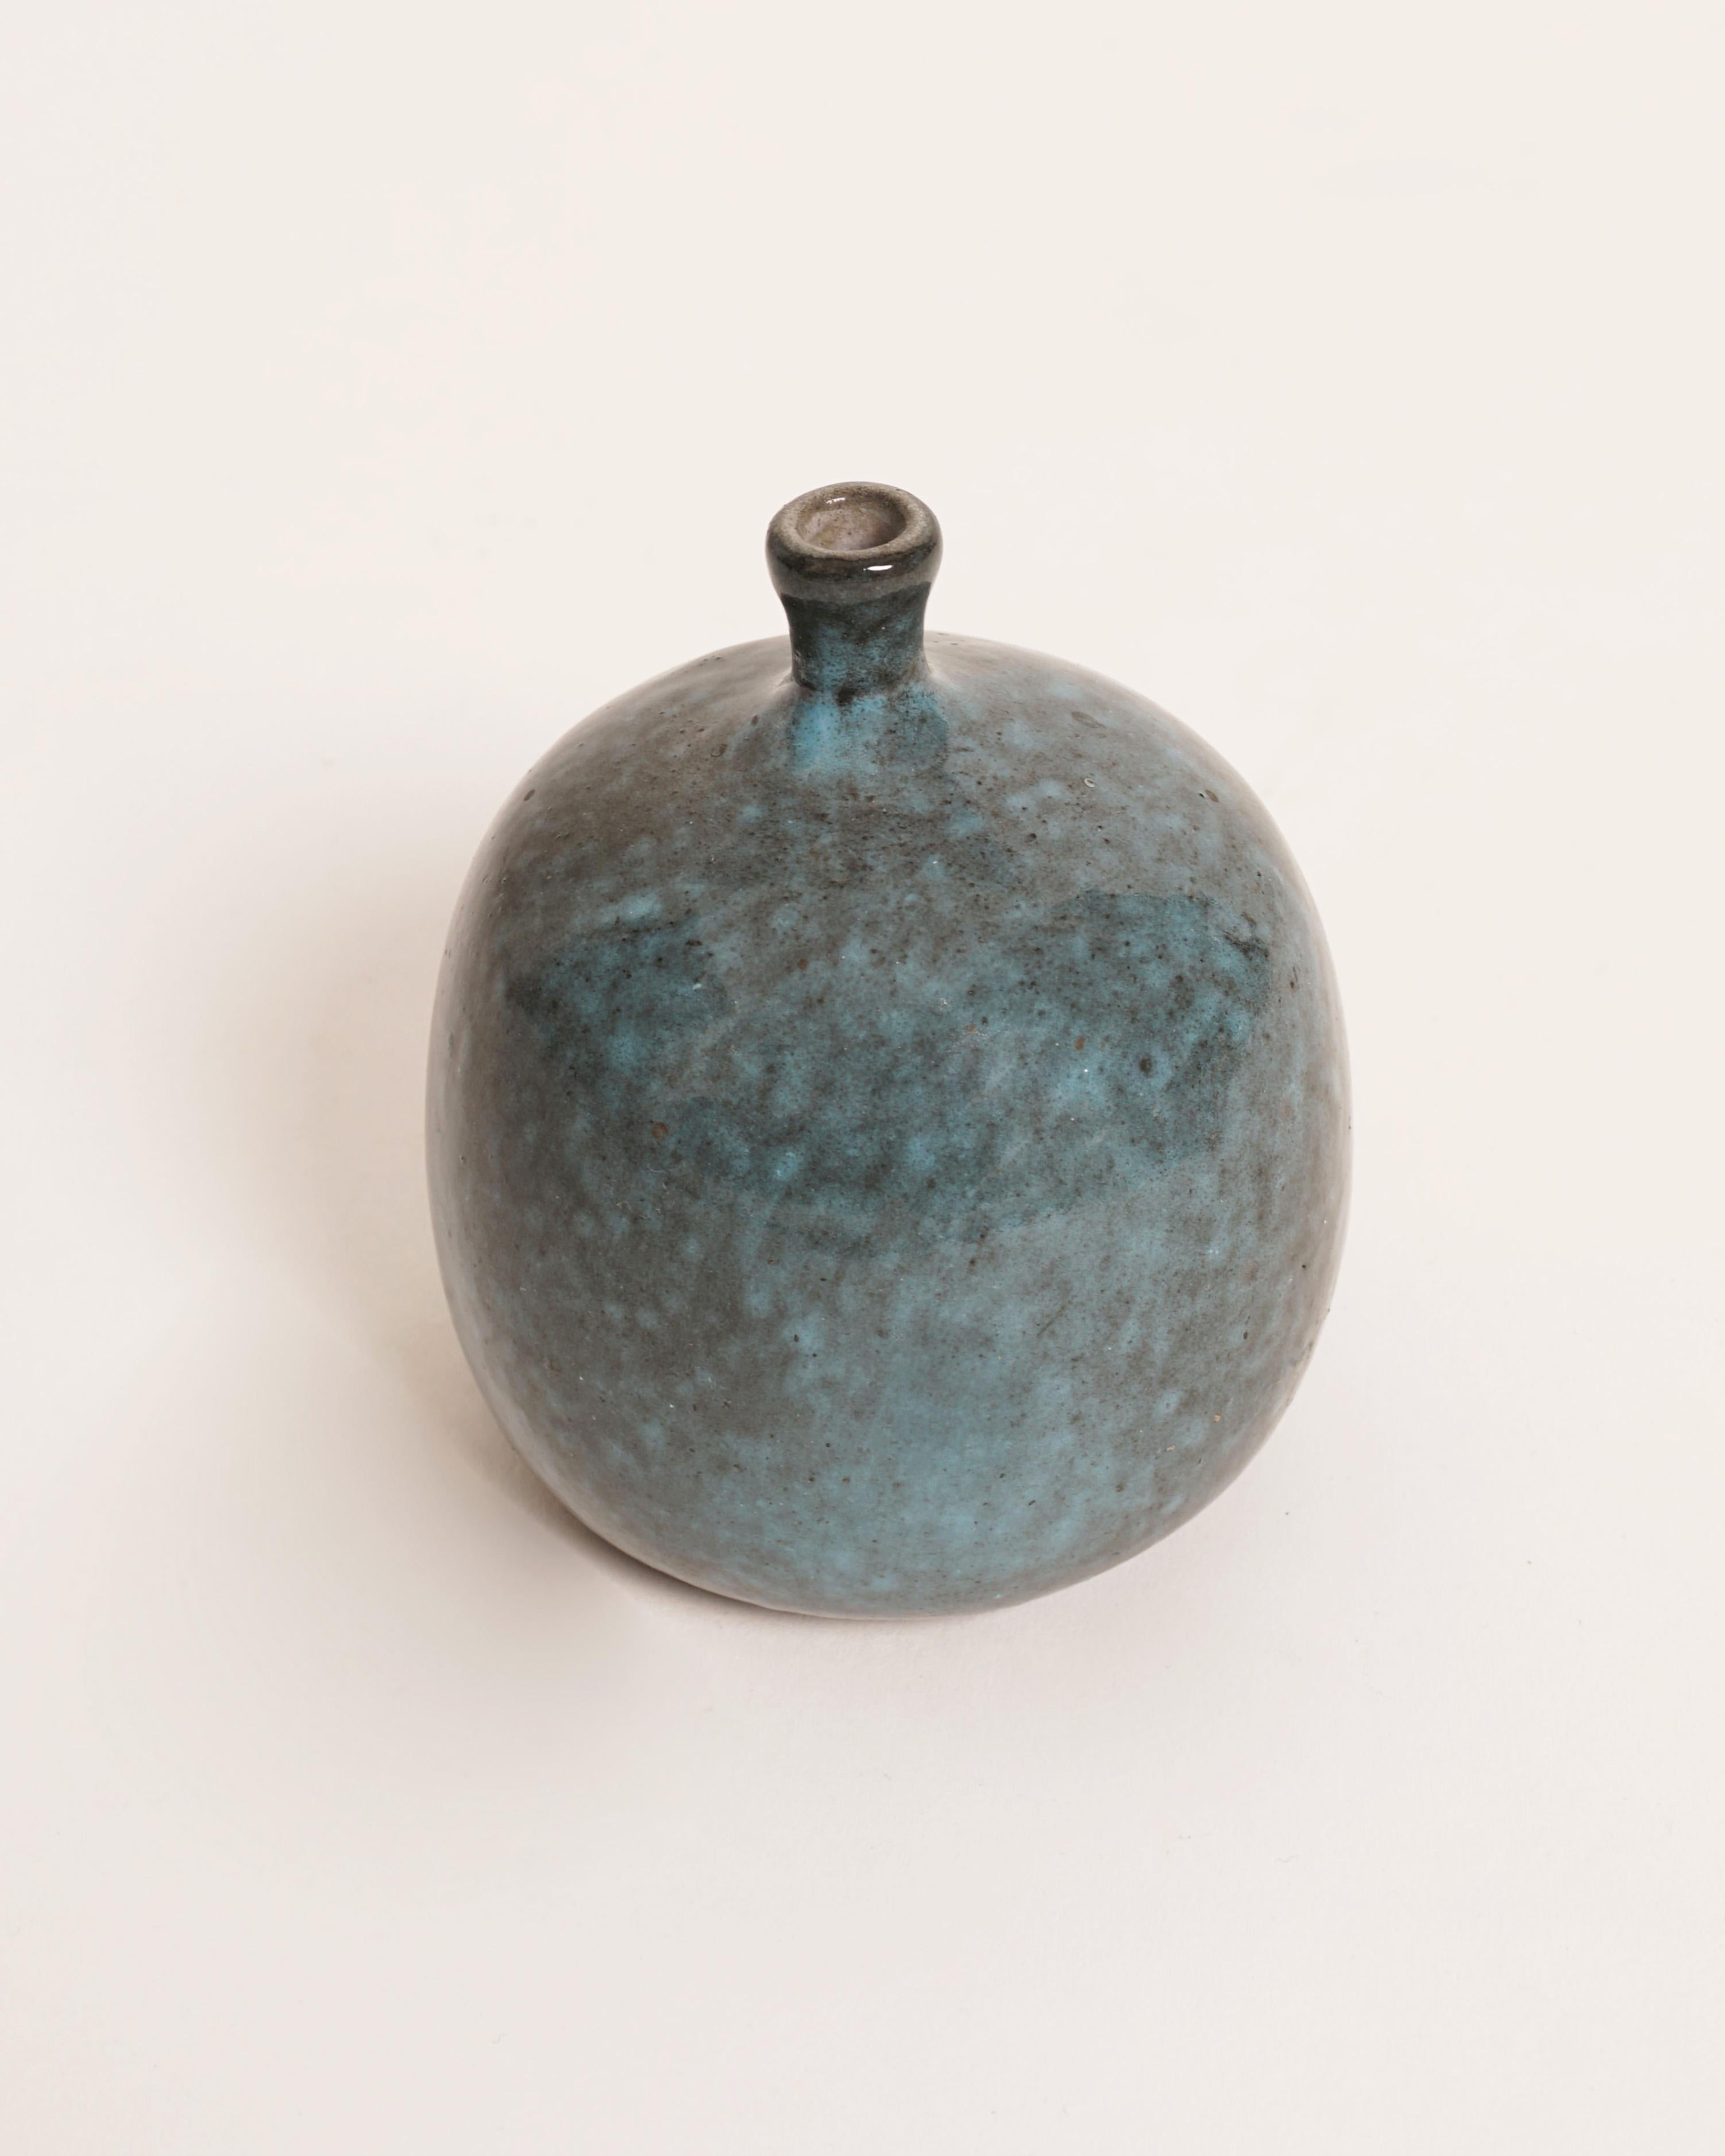 Jacques and Dani Ruelland
'Boule', c. 1970
Execution: Ceramic speckled blue
Signed: Ruelland
H : 11 cm (4.33